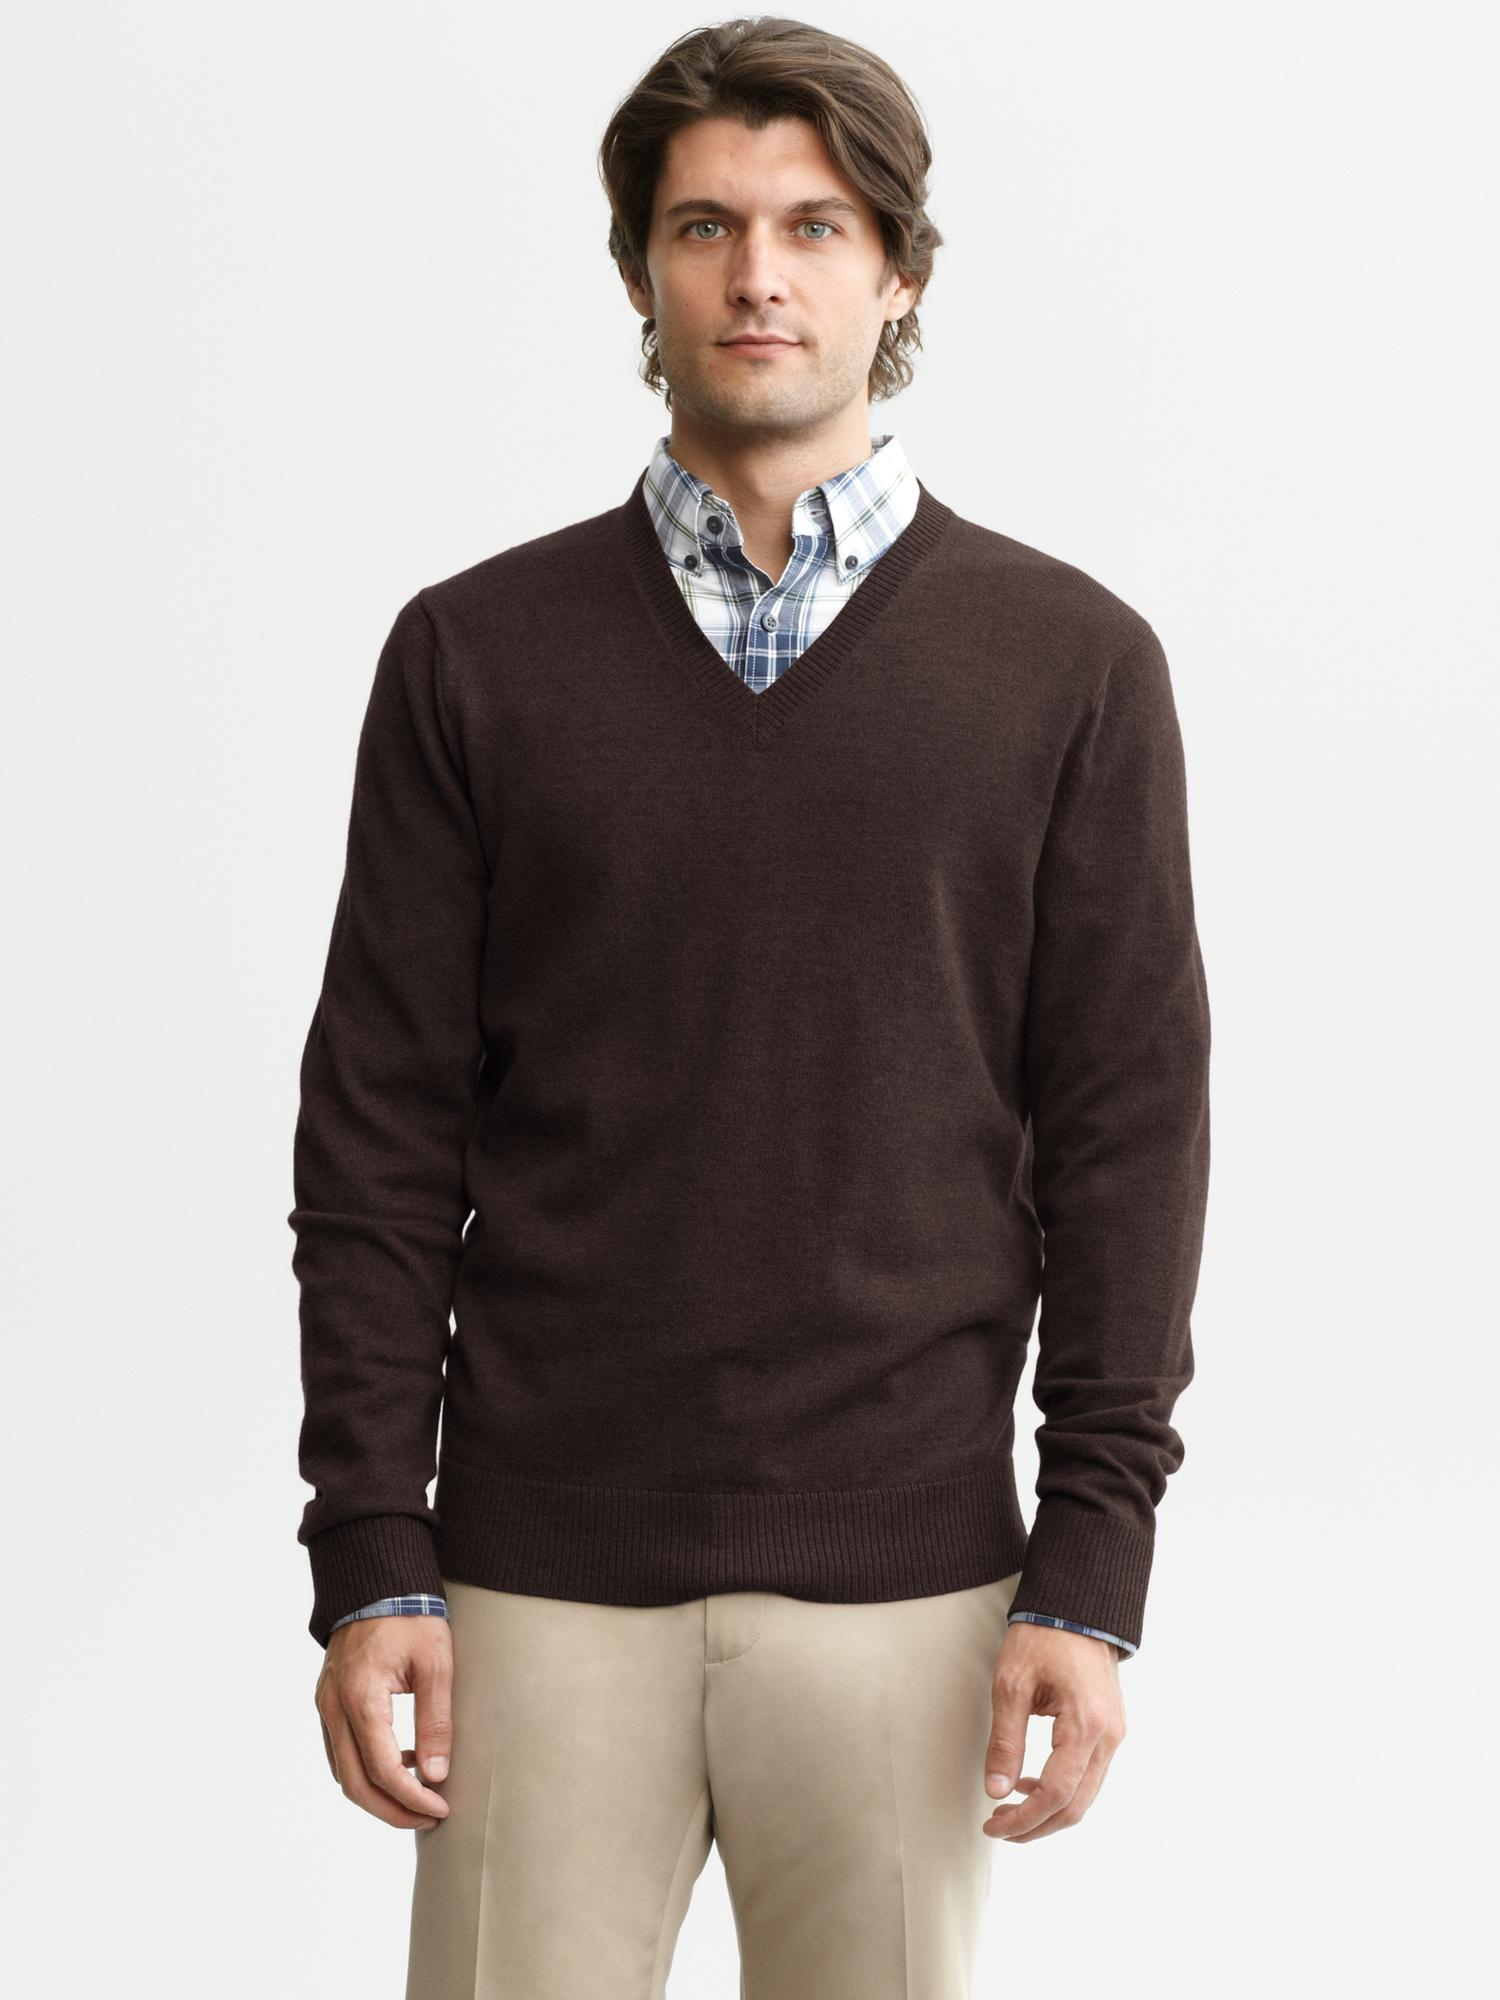 Banana Republic Merino Wool V Neck Sweater - Gray Cardigan Sweater